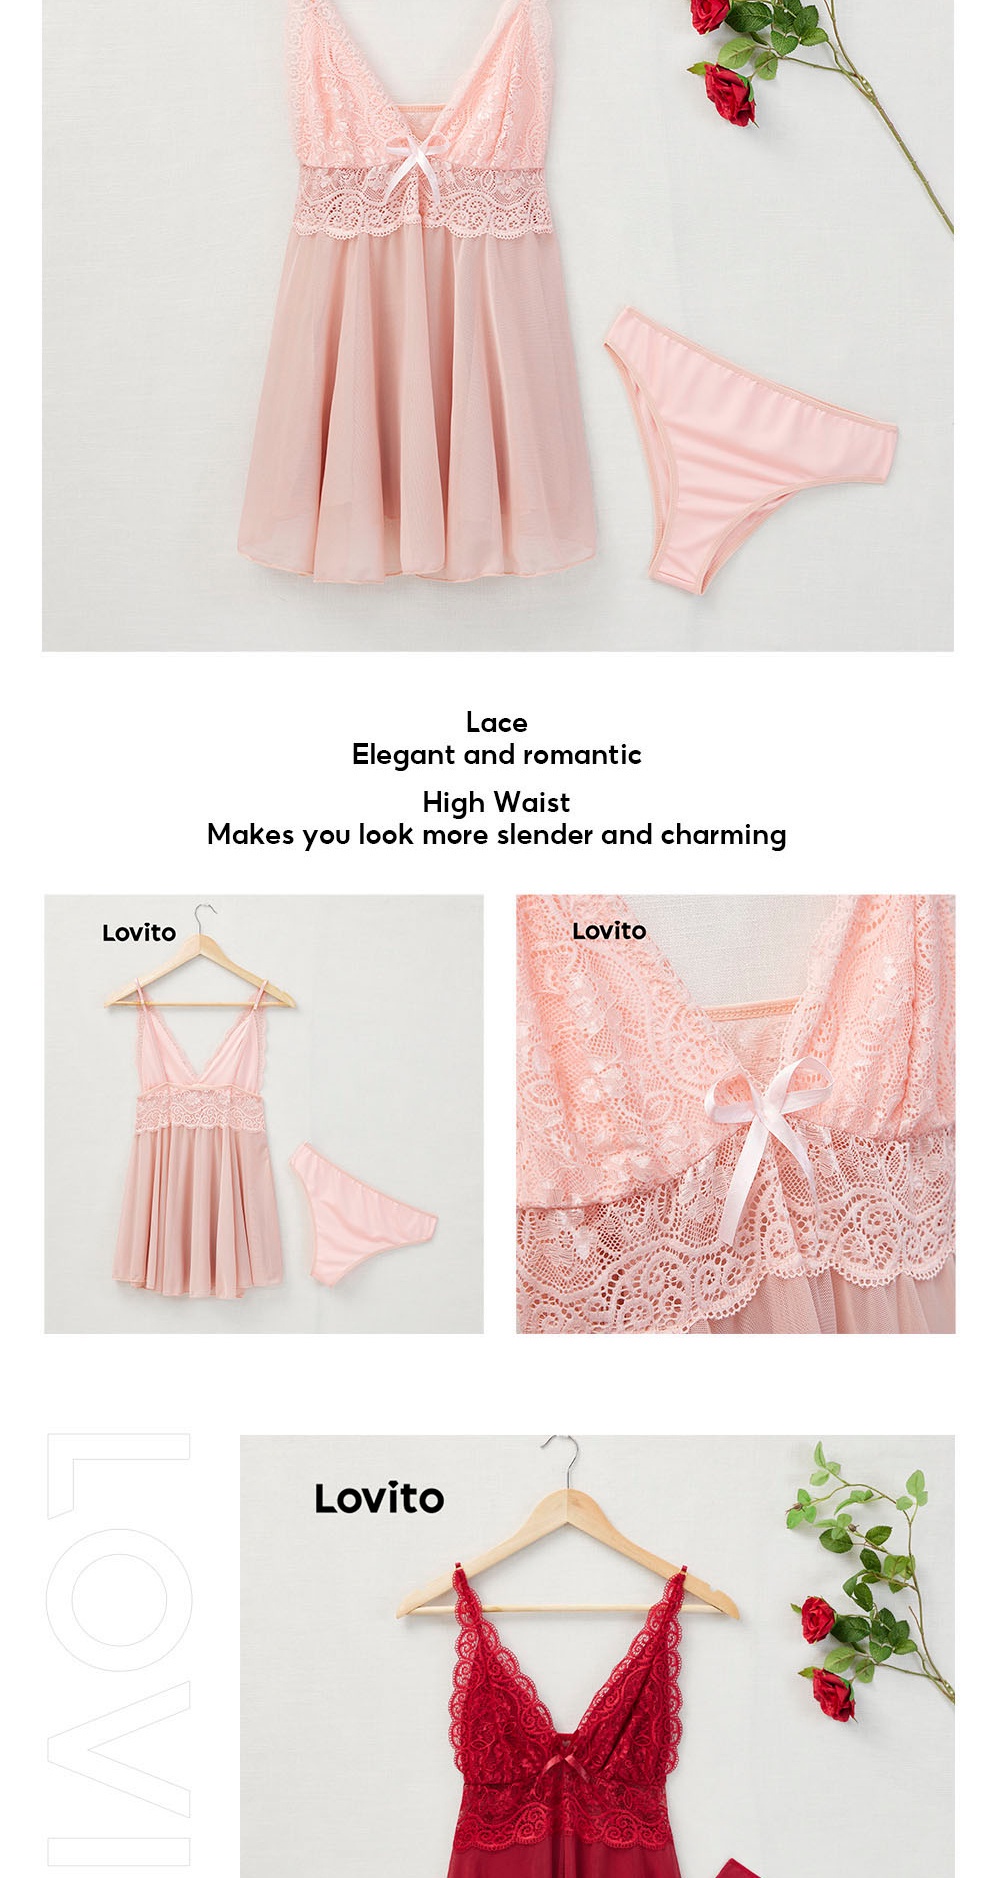 Lace High Waist Deep V Neck Nighties Sleepwear Lingerie Set - Elegant and Comfortable - SHOPPE.LK